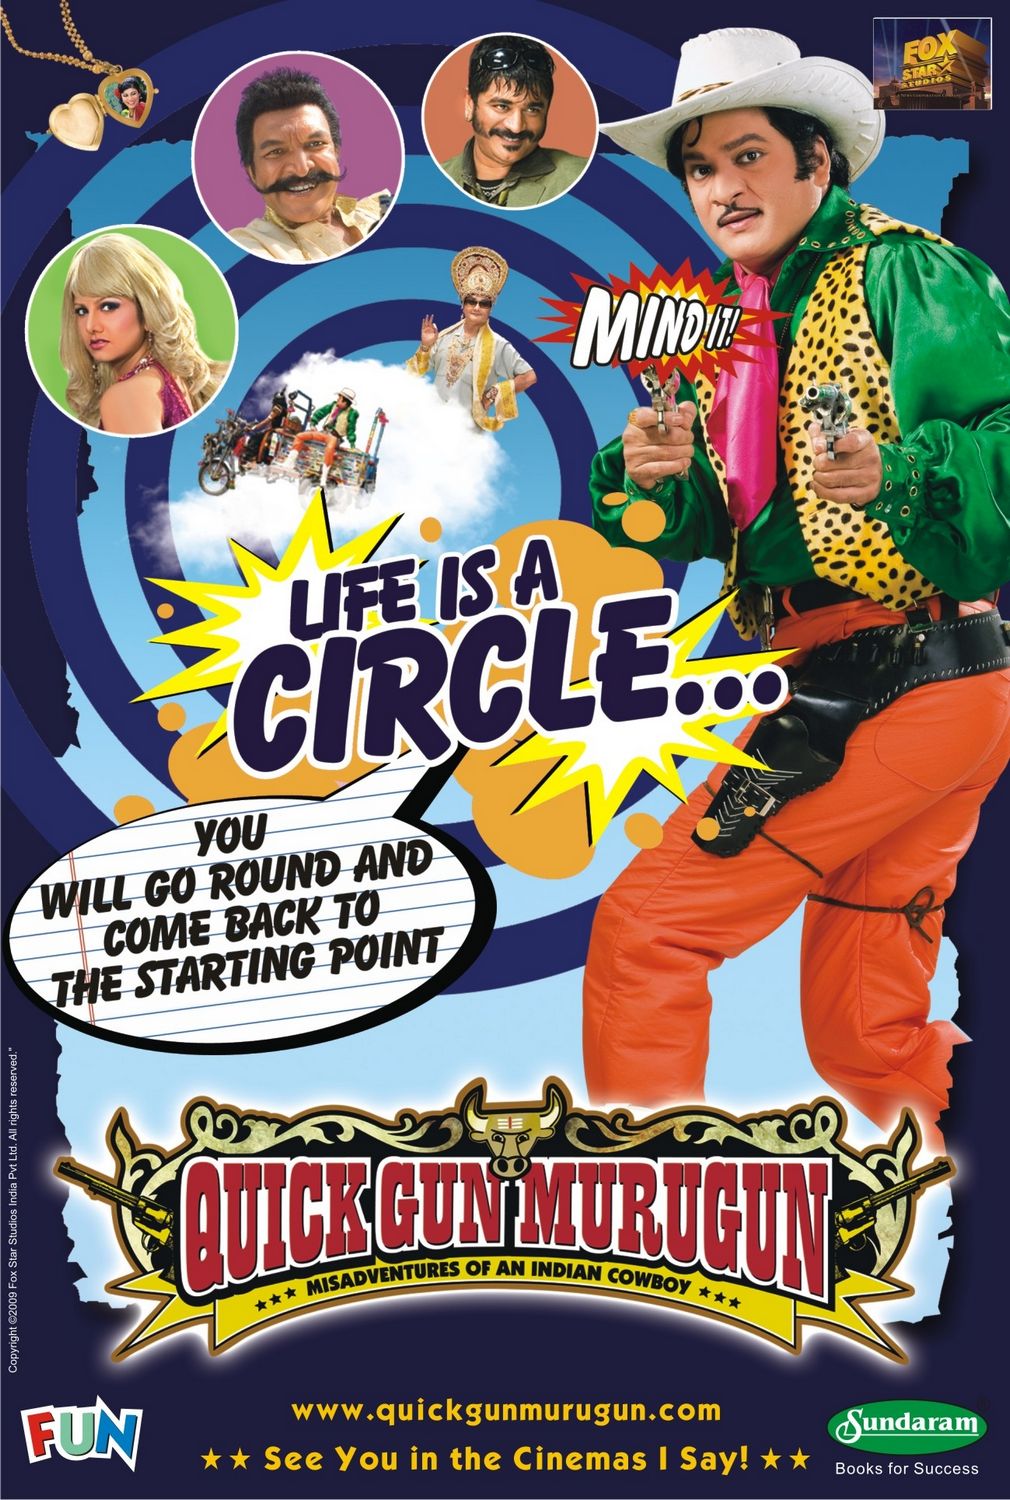 Extra Large Movie Poster Image for Quick Gun Murugun (#6 of 8)